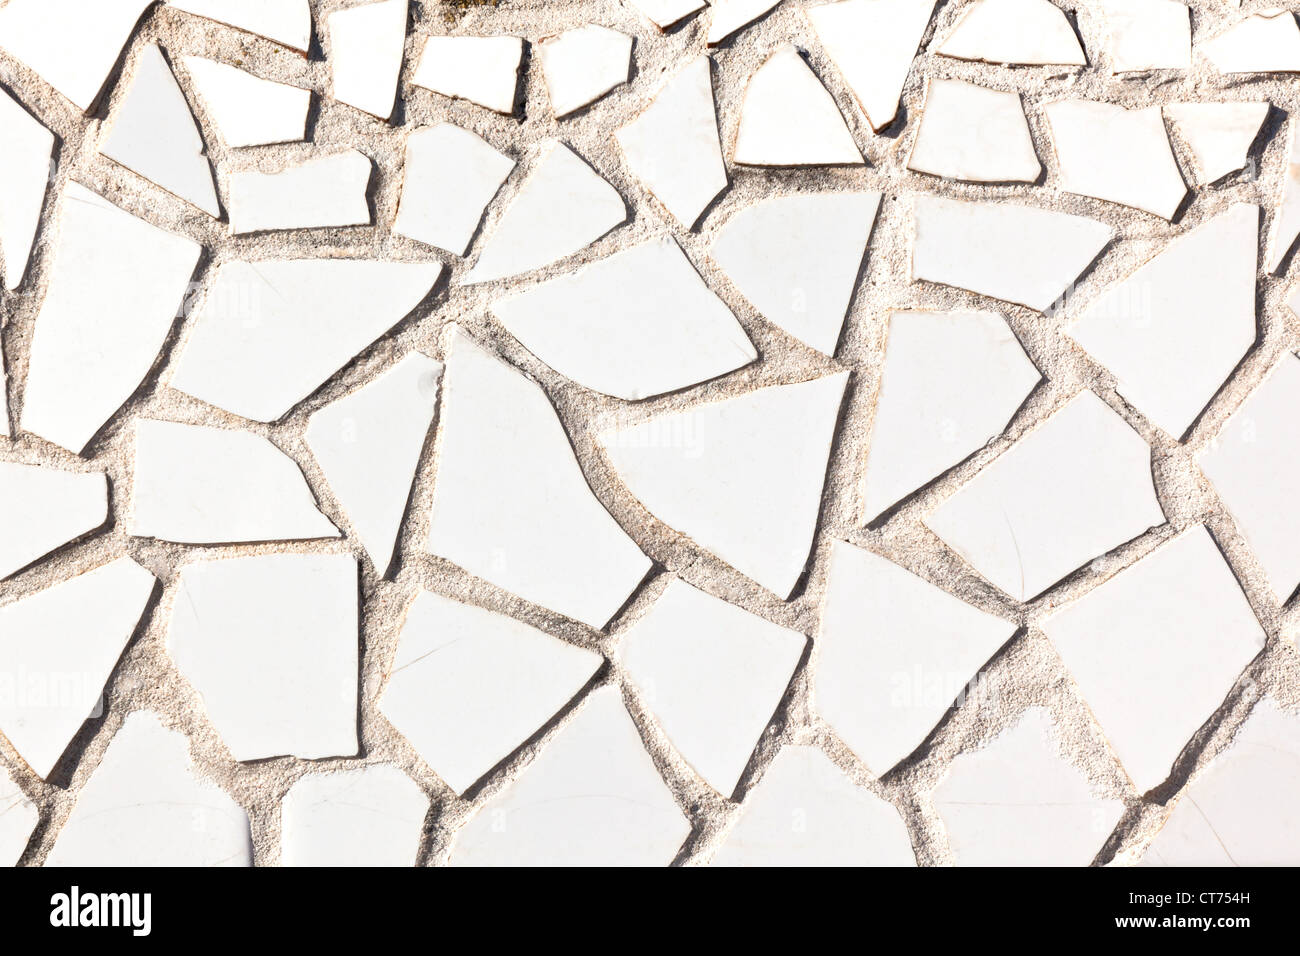 Broken White Tile Mosaic Background. Horizontal shot Stock Photo